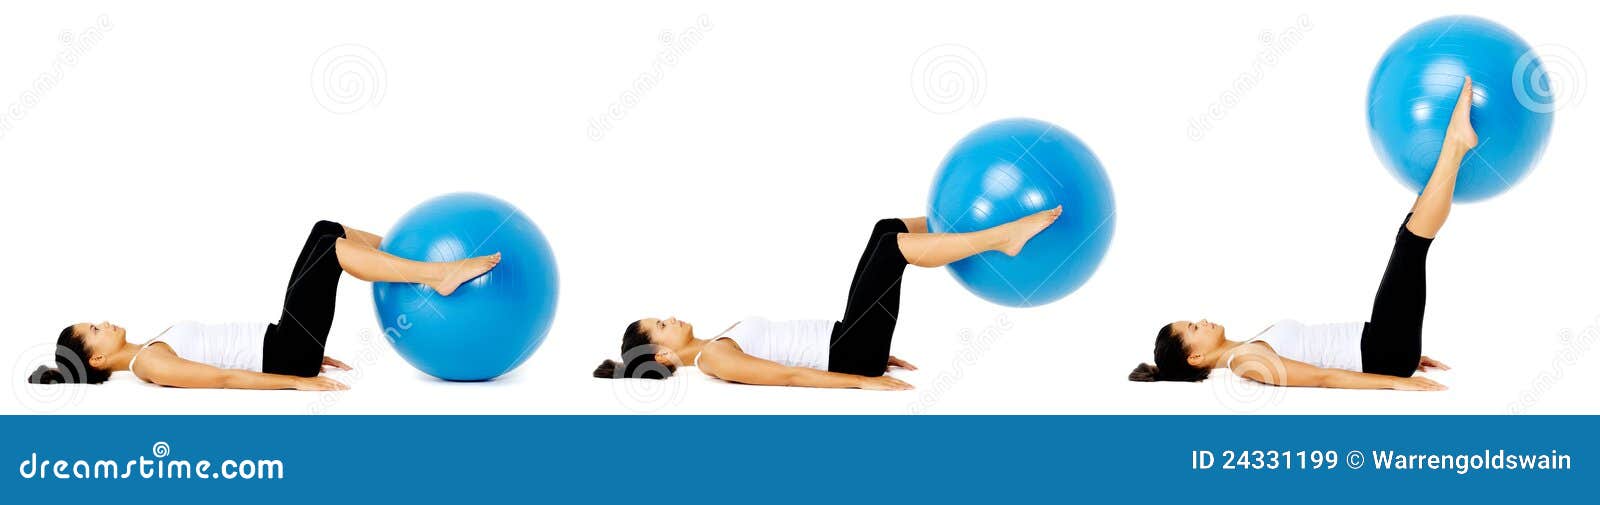 pilates ball exercise